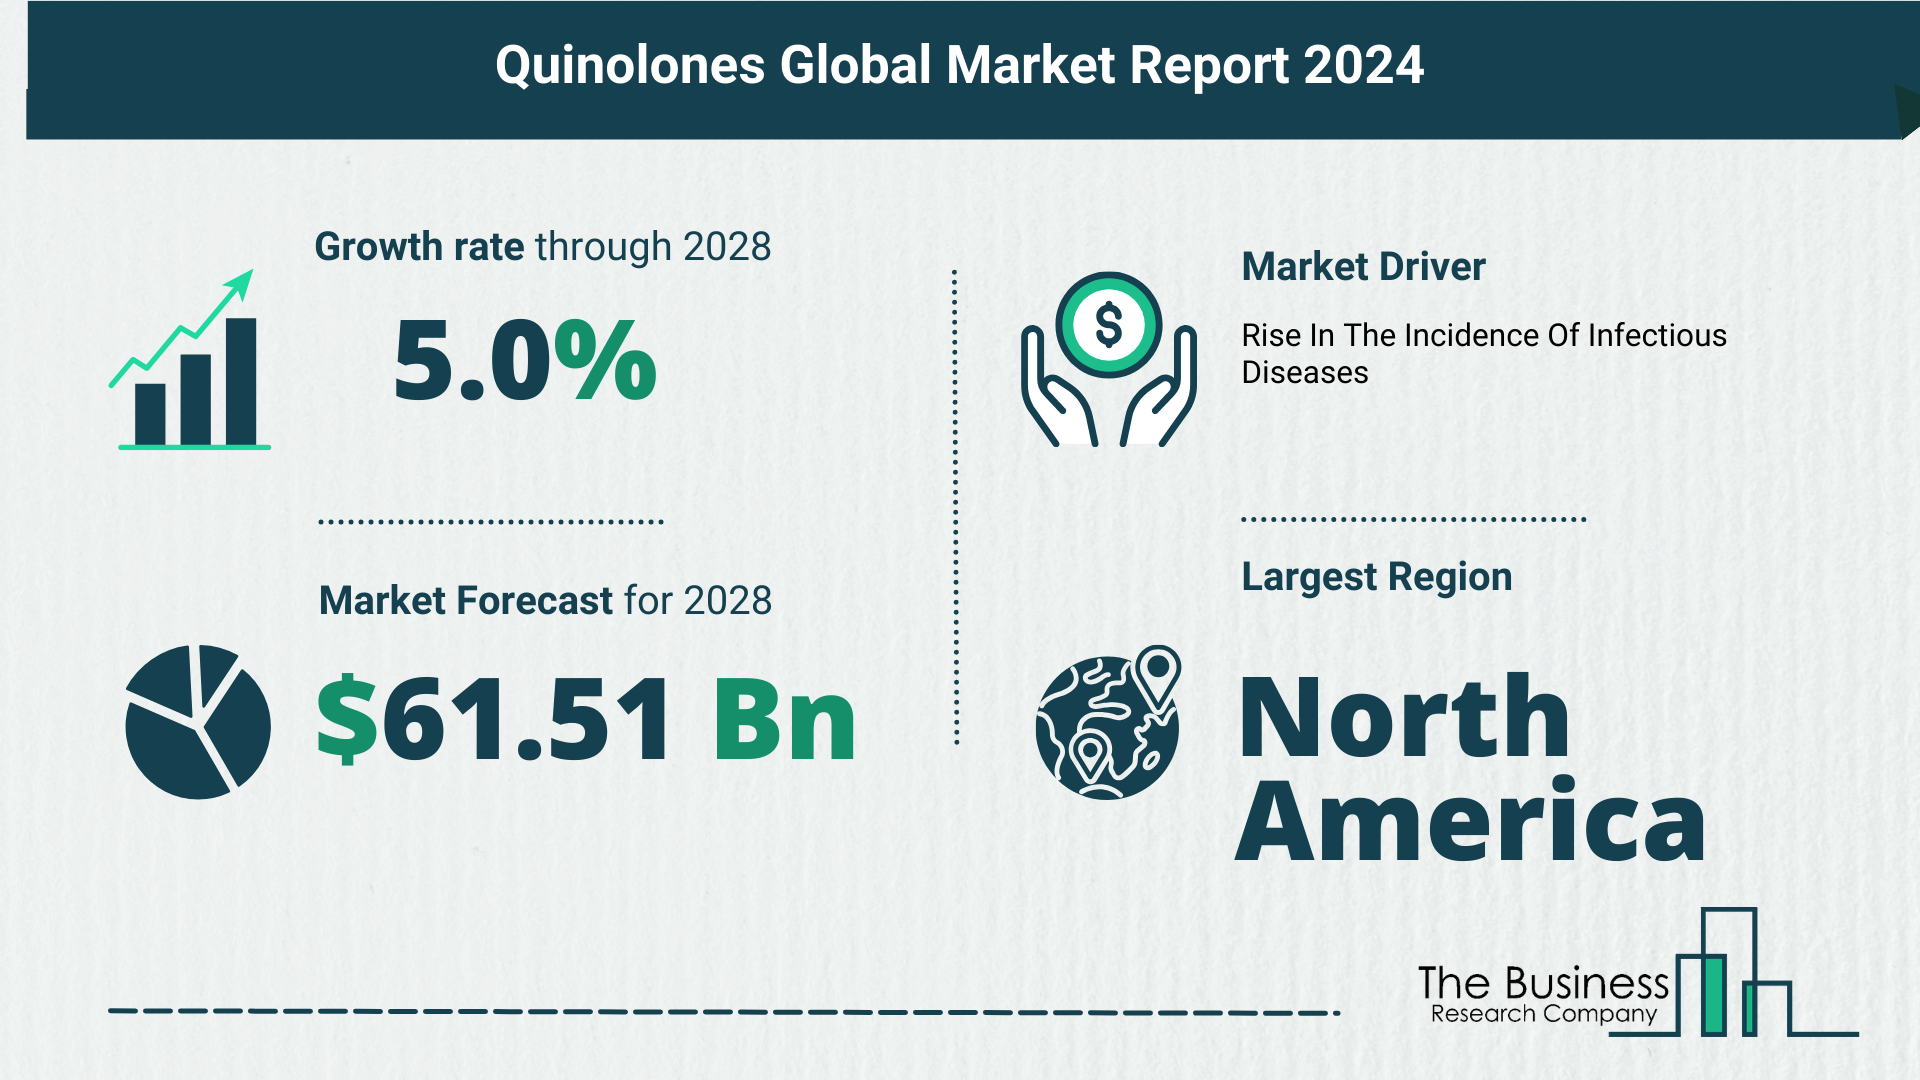 Global Quinolones Market